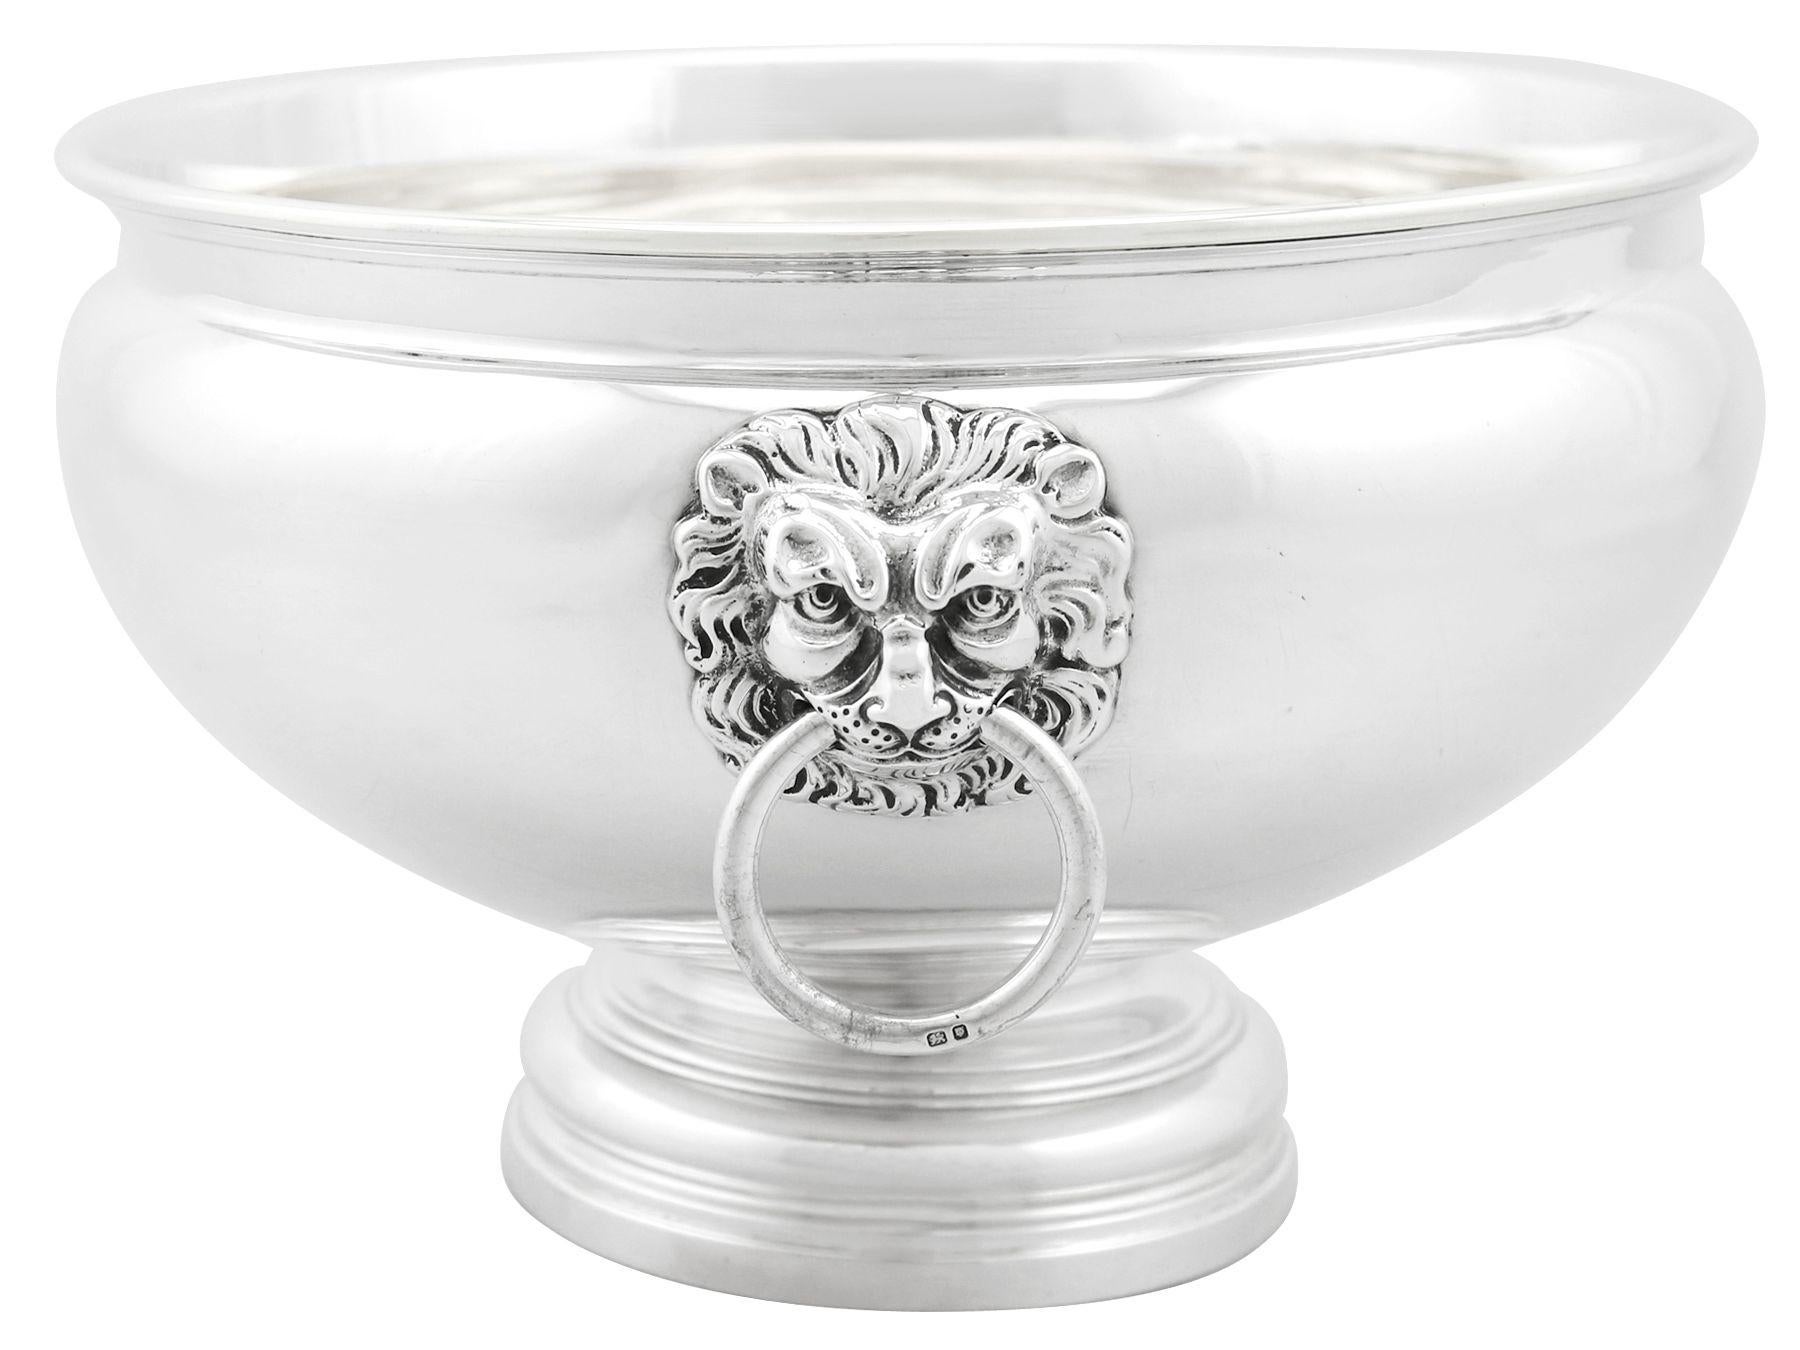 Mid-Century Modern 1930s Harrods Ltd Sterling Silver Presentation Bowl For Sale